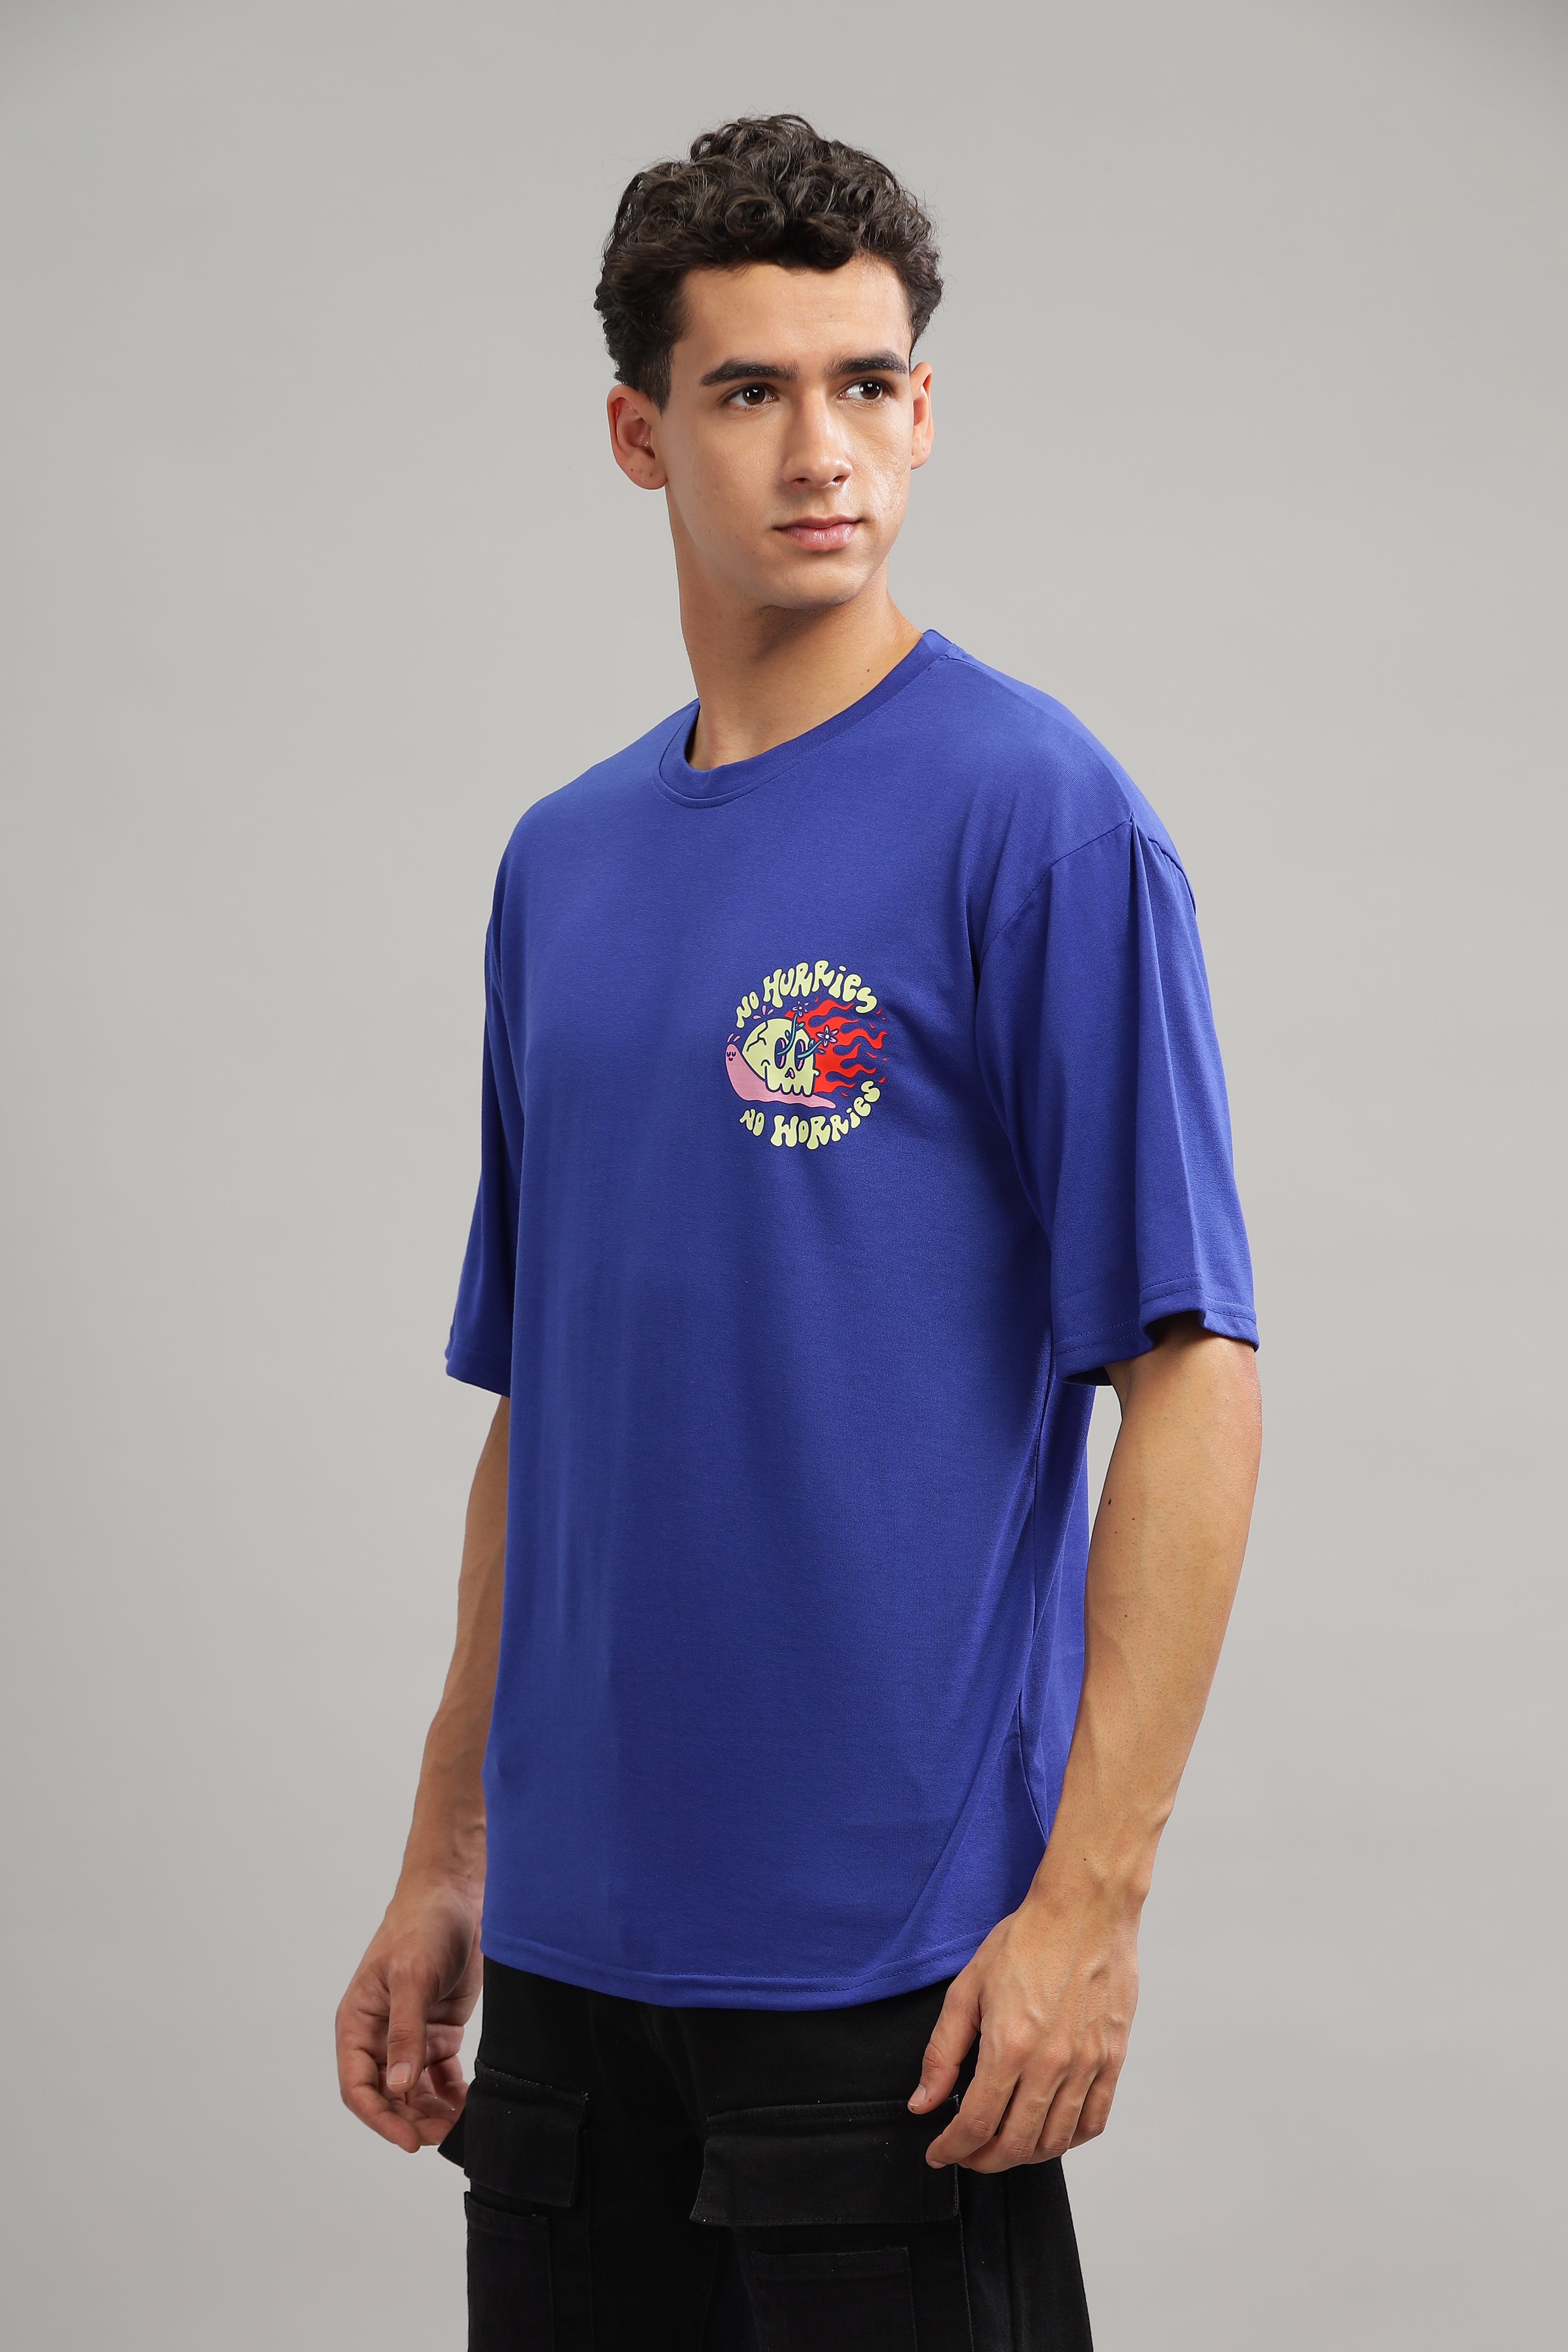 Blue Oversized "No Worries & No Hurries" T-Shirt